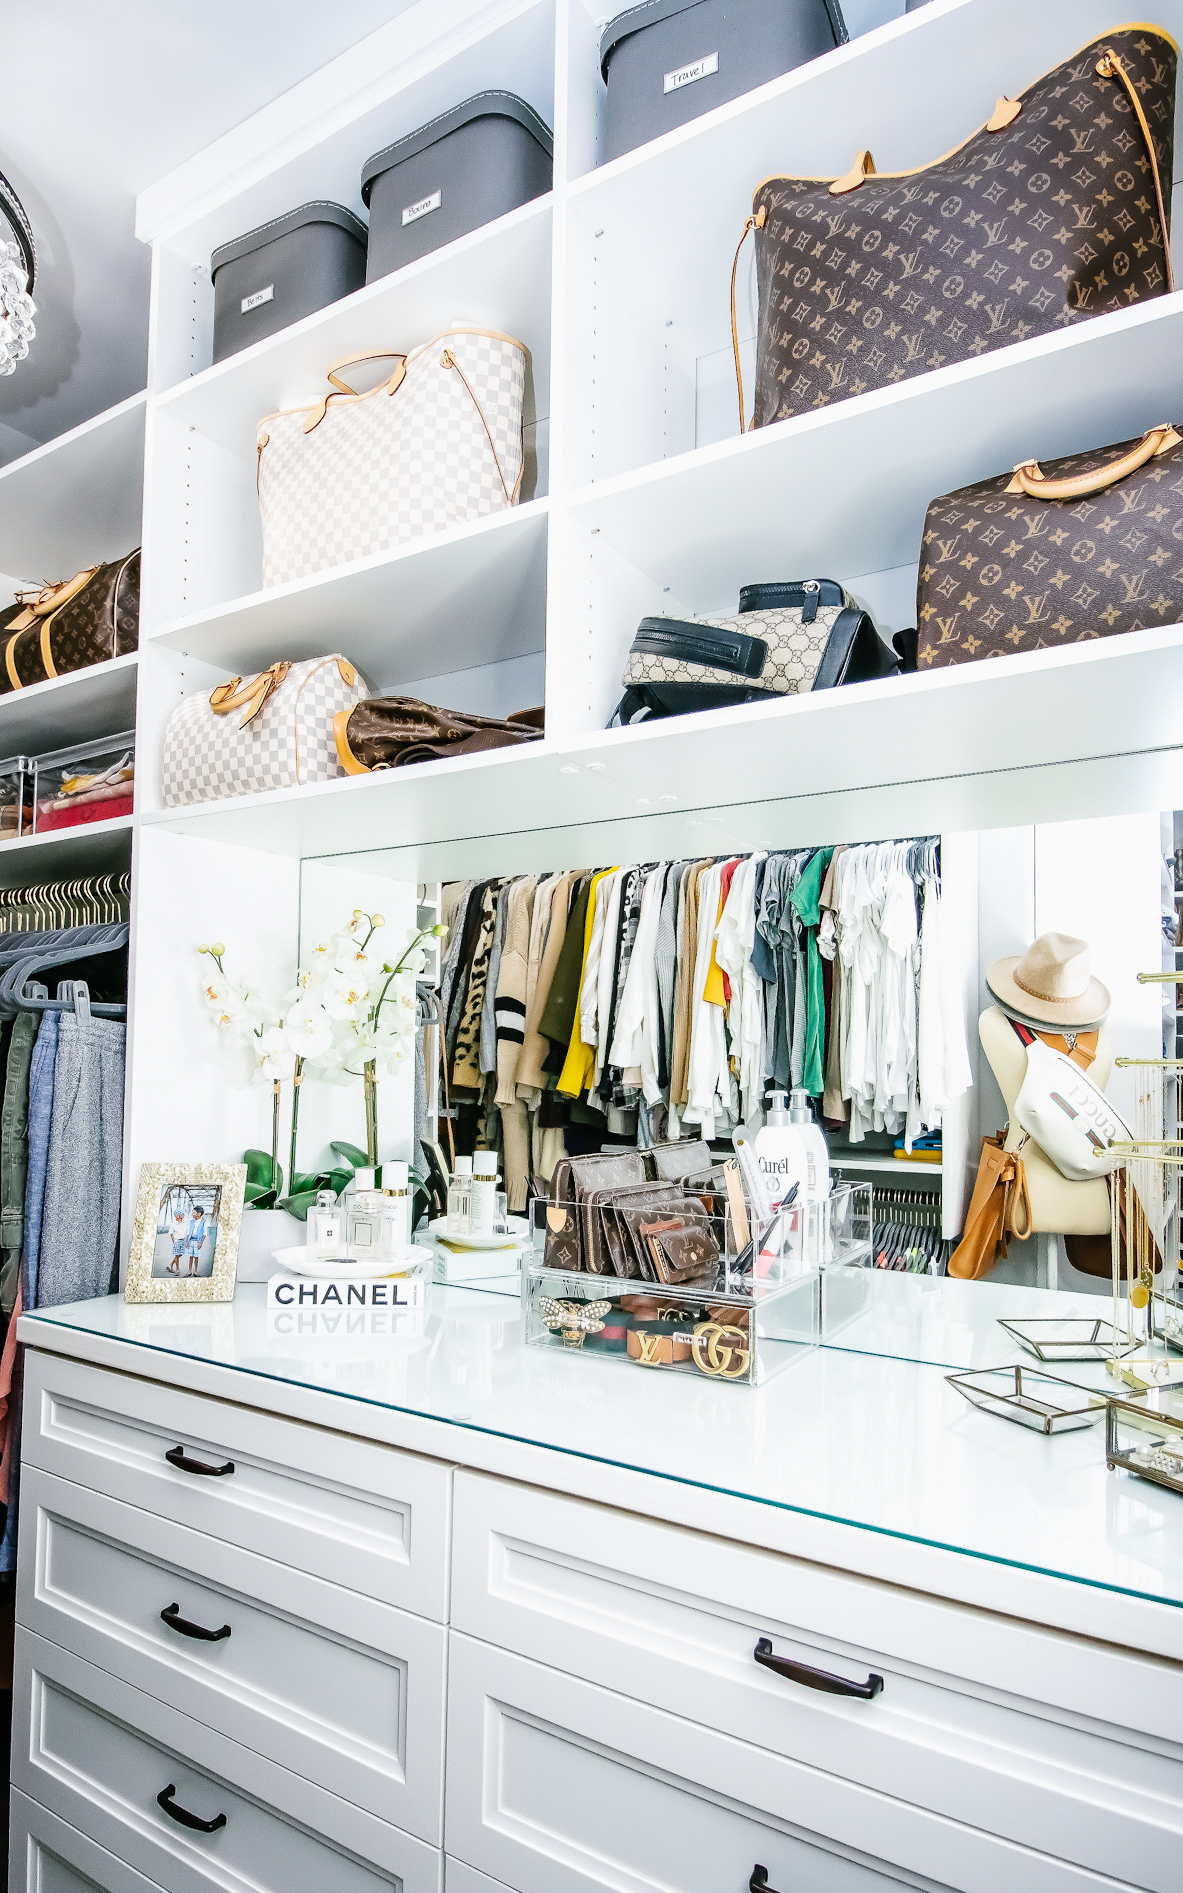 cozy closet luxe slides reviews｜TikTok Search